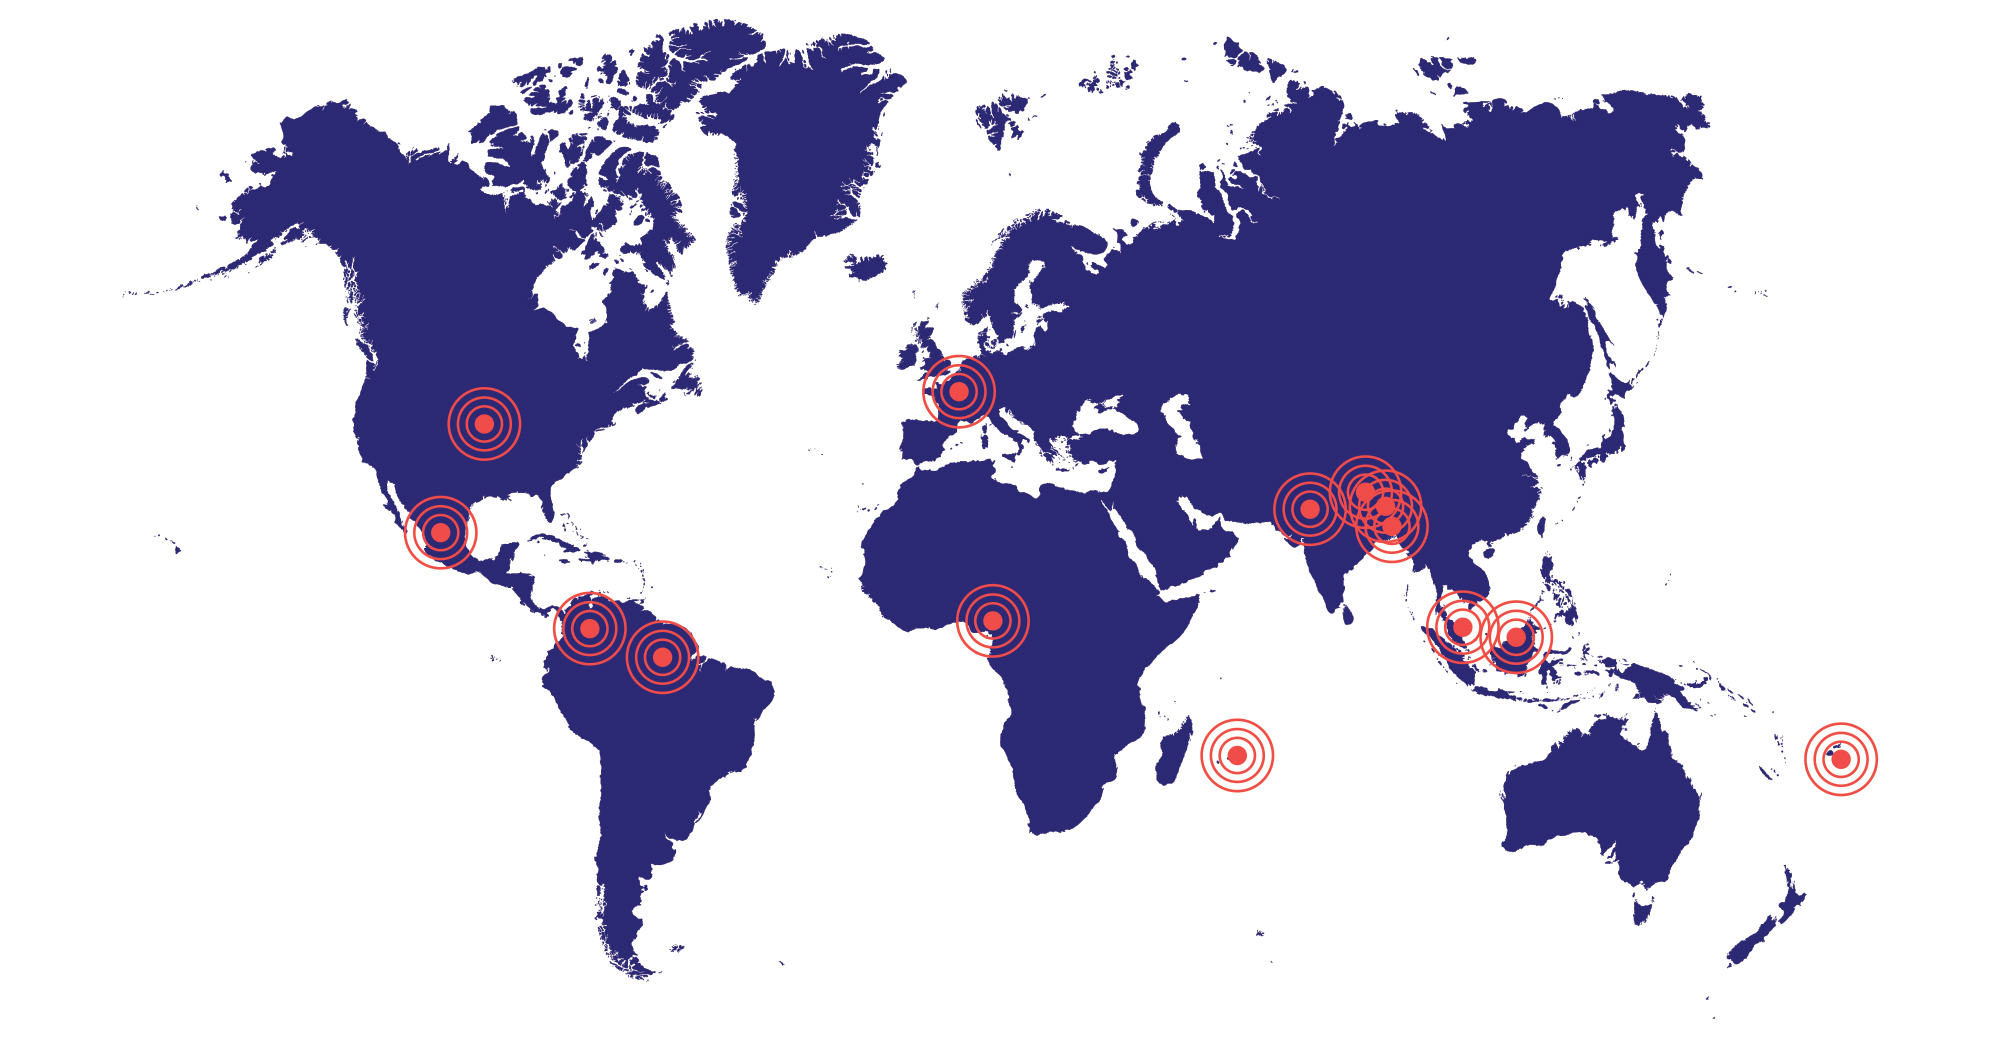 map of student scholar work around the globe in 2021